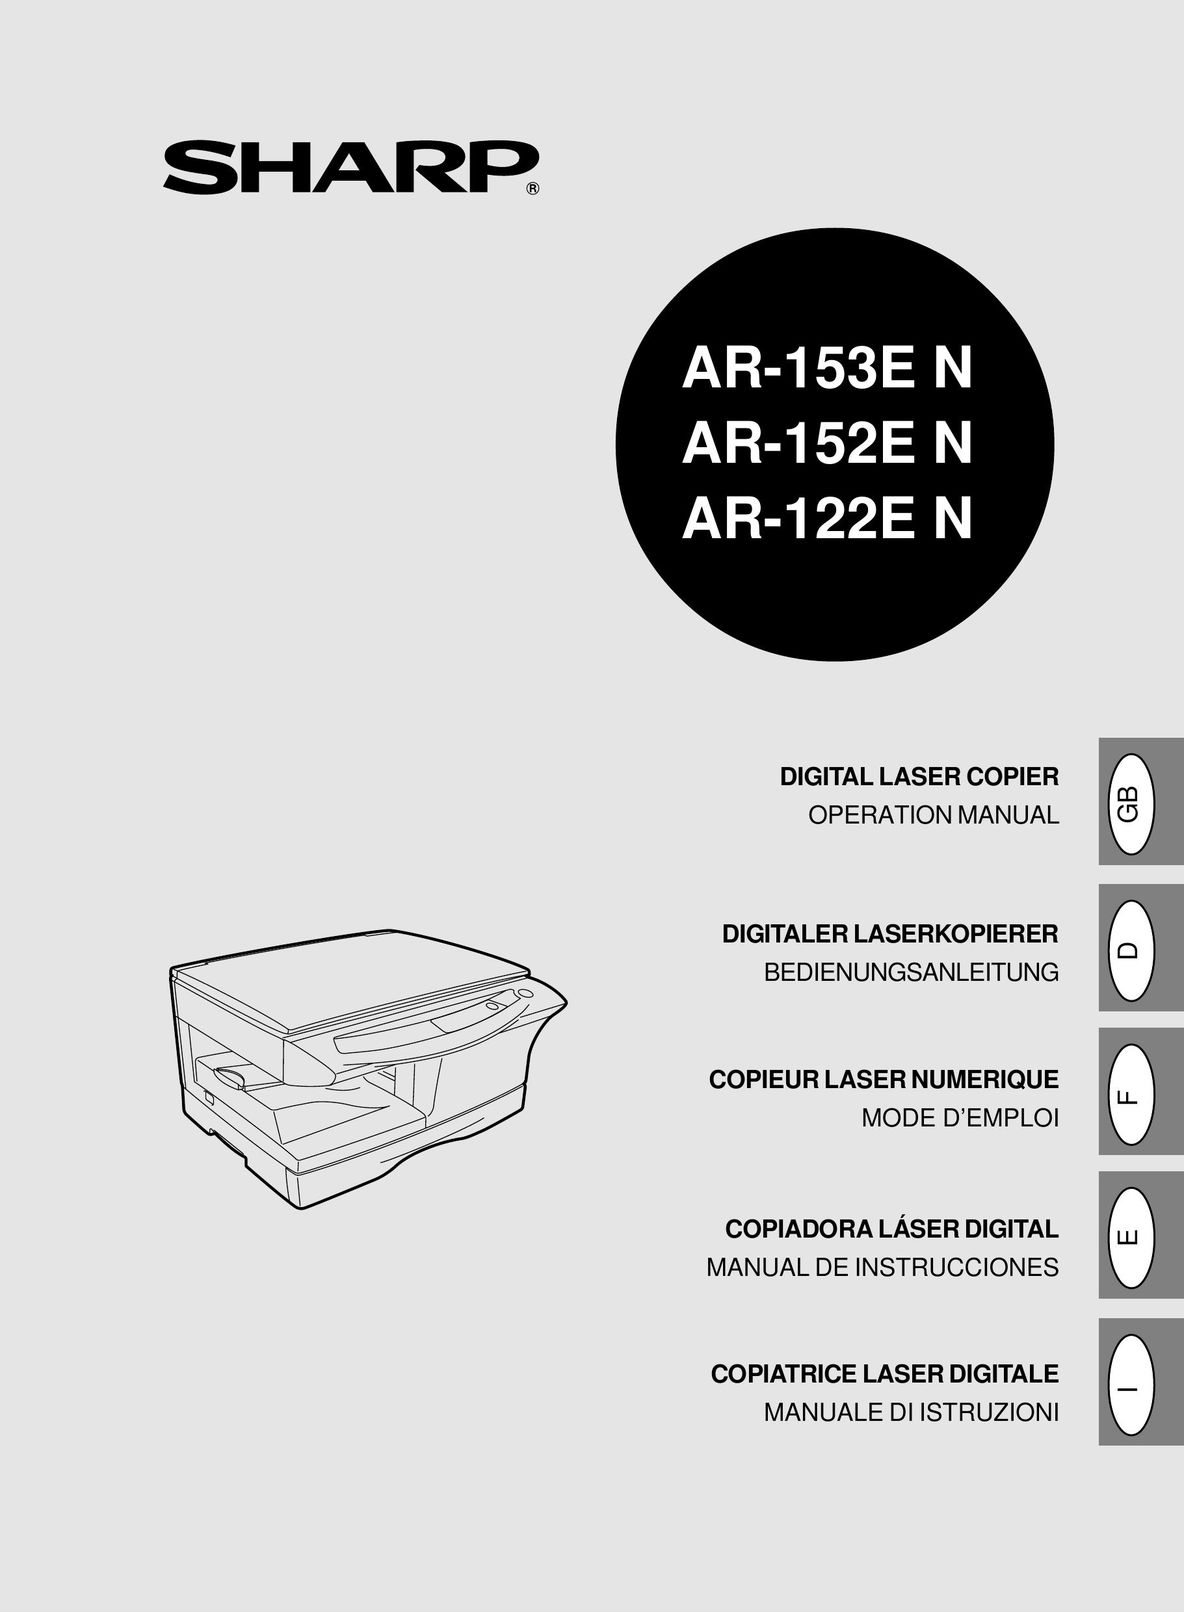 Sharp AR-153E N Copier User Manual